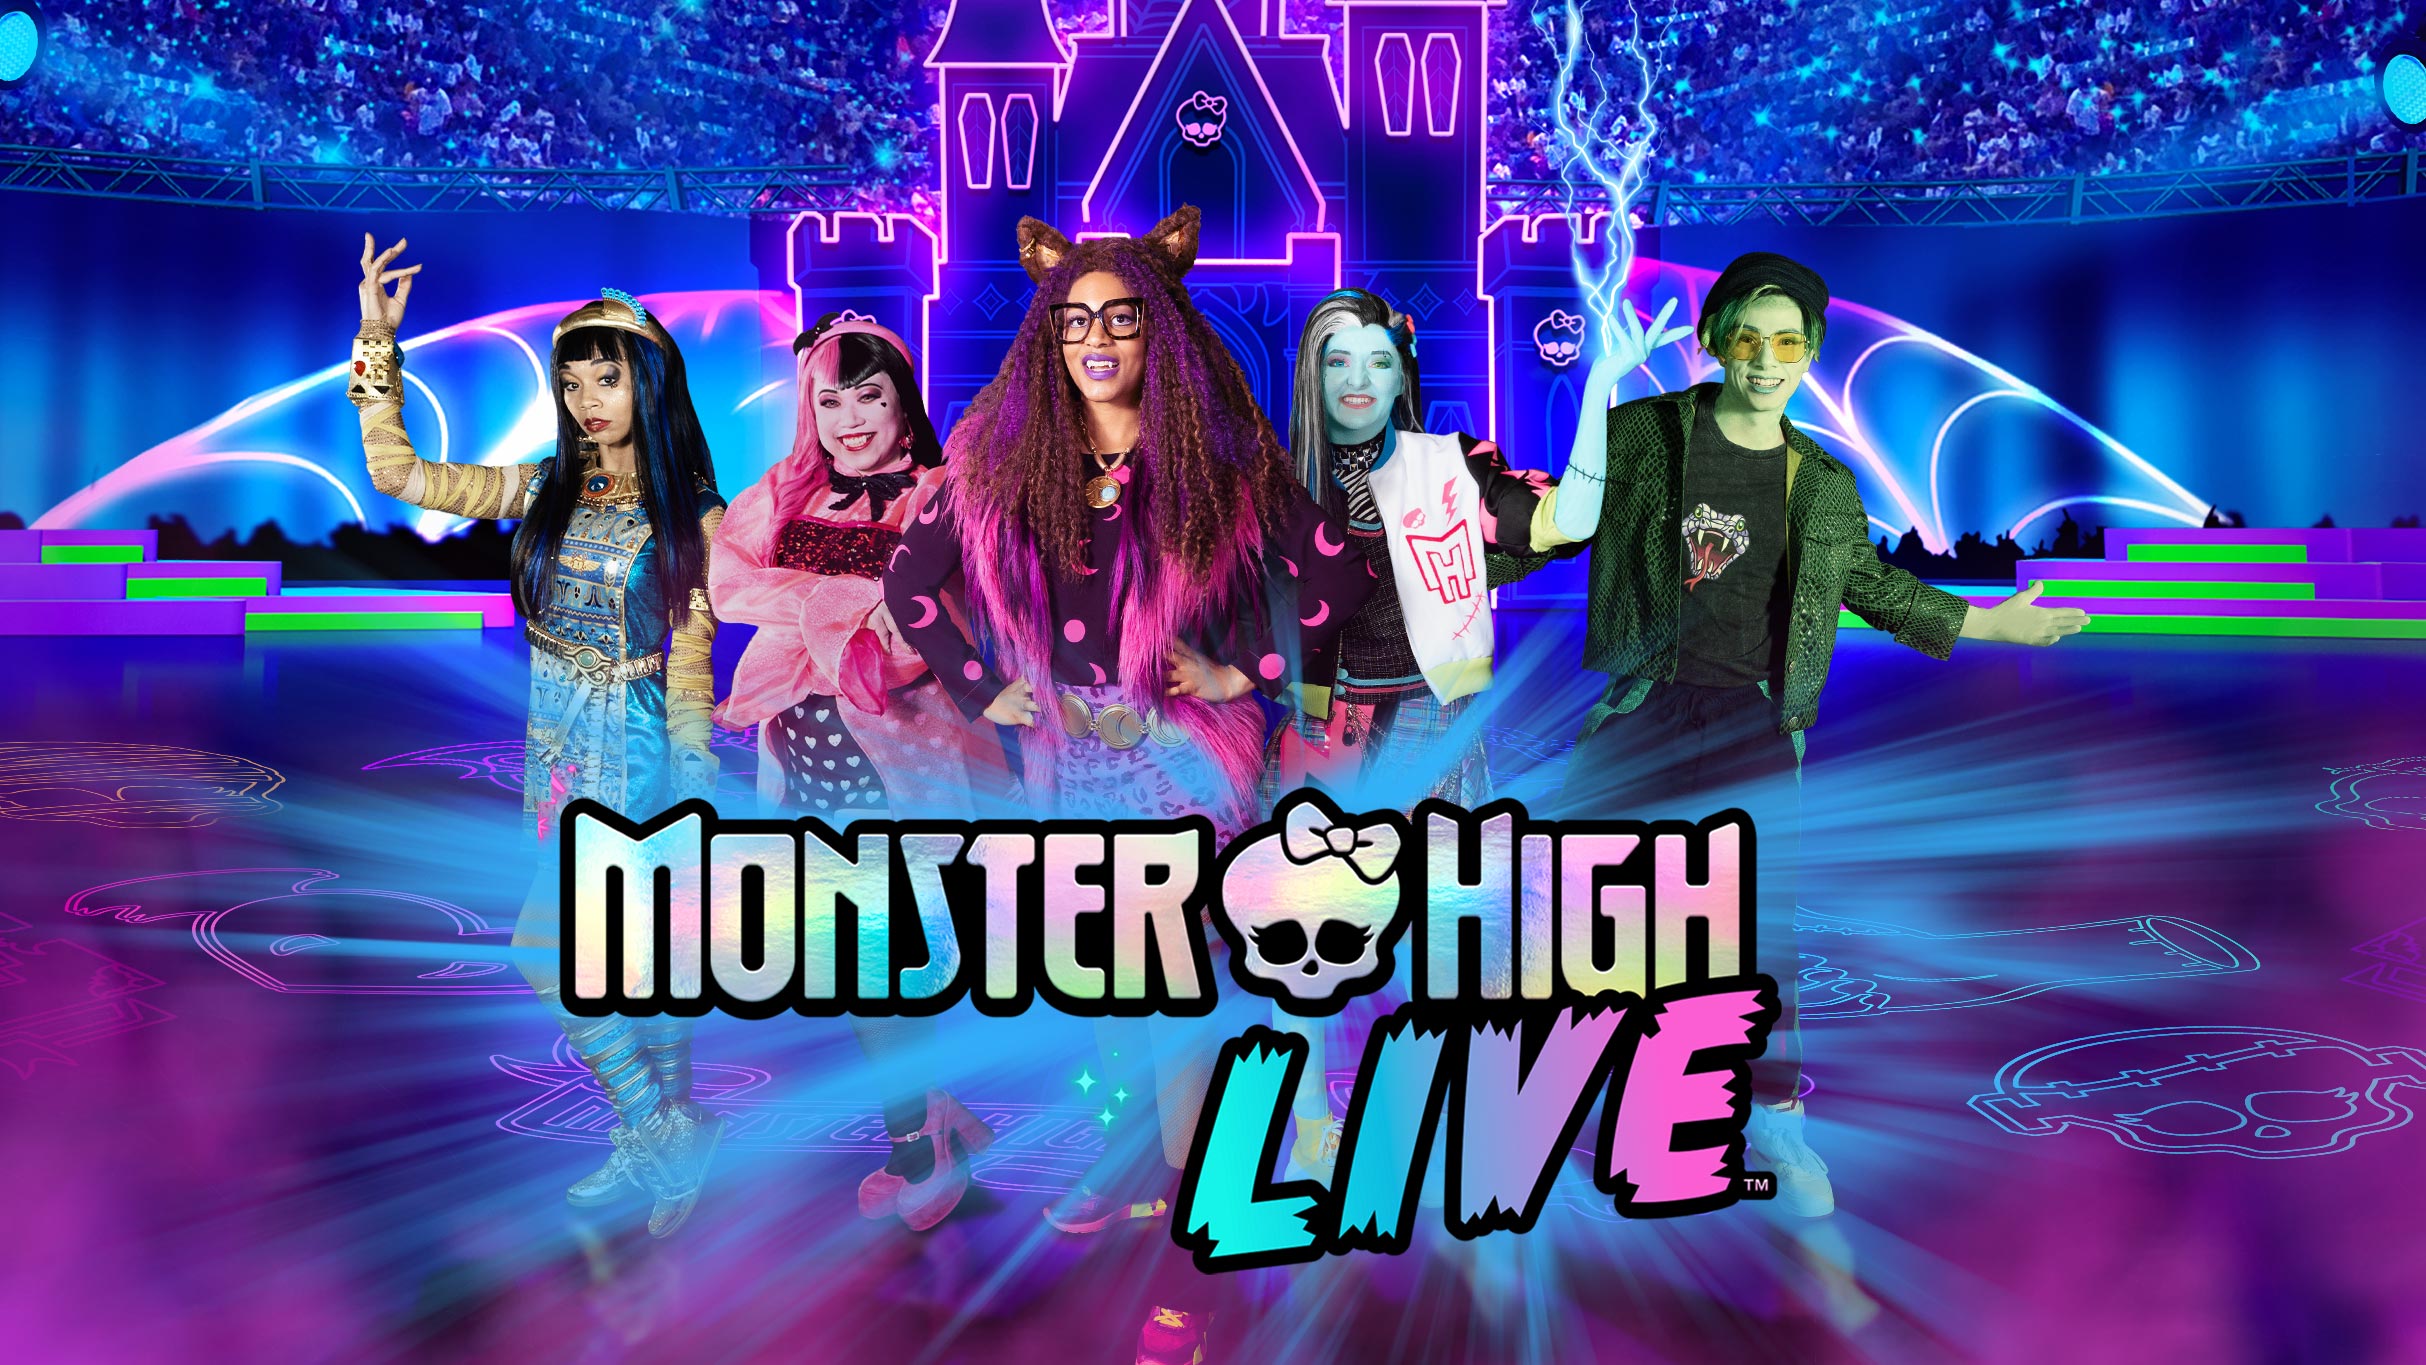 Monster High Live in Hoffman Estates promo photo for Official Platinum presale offer code